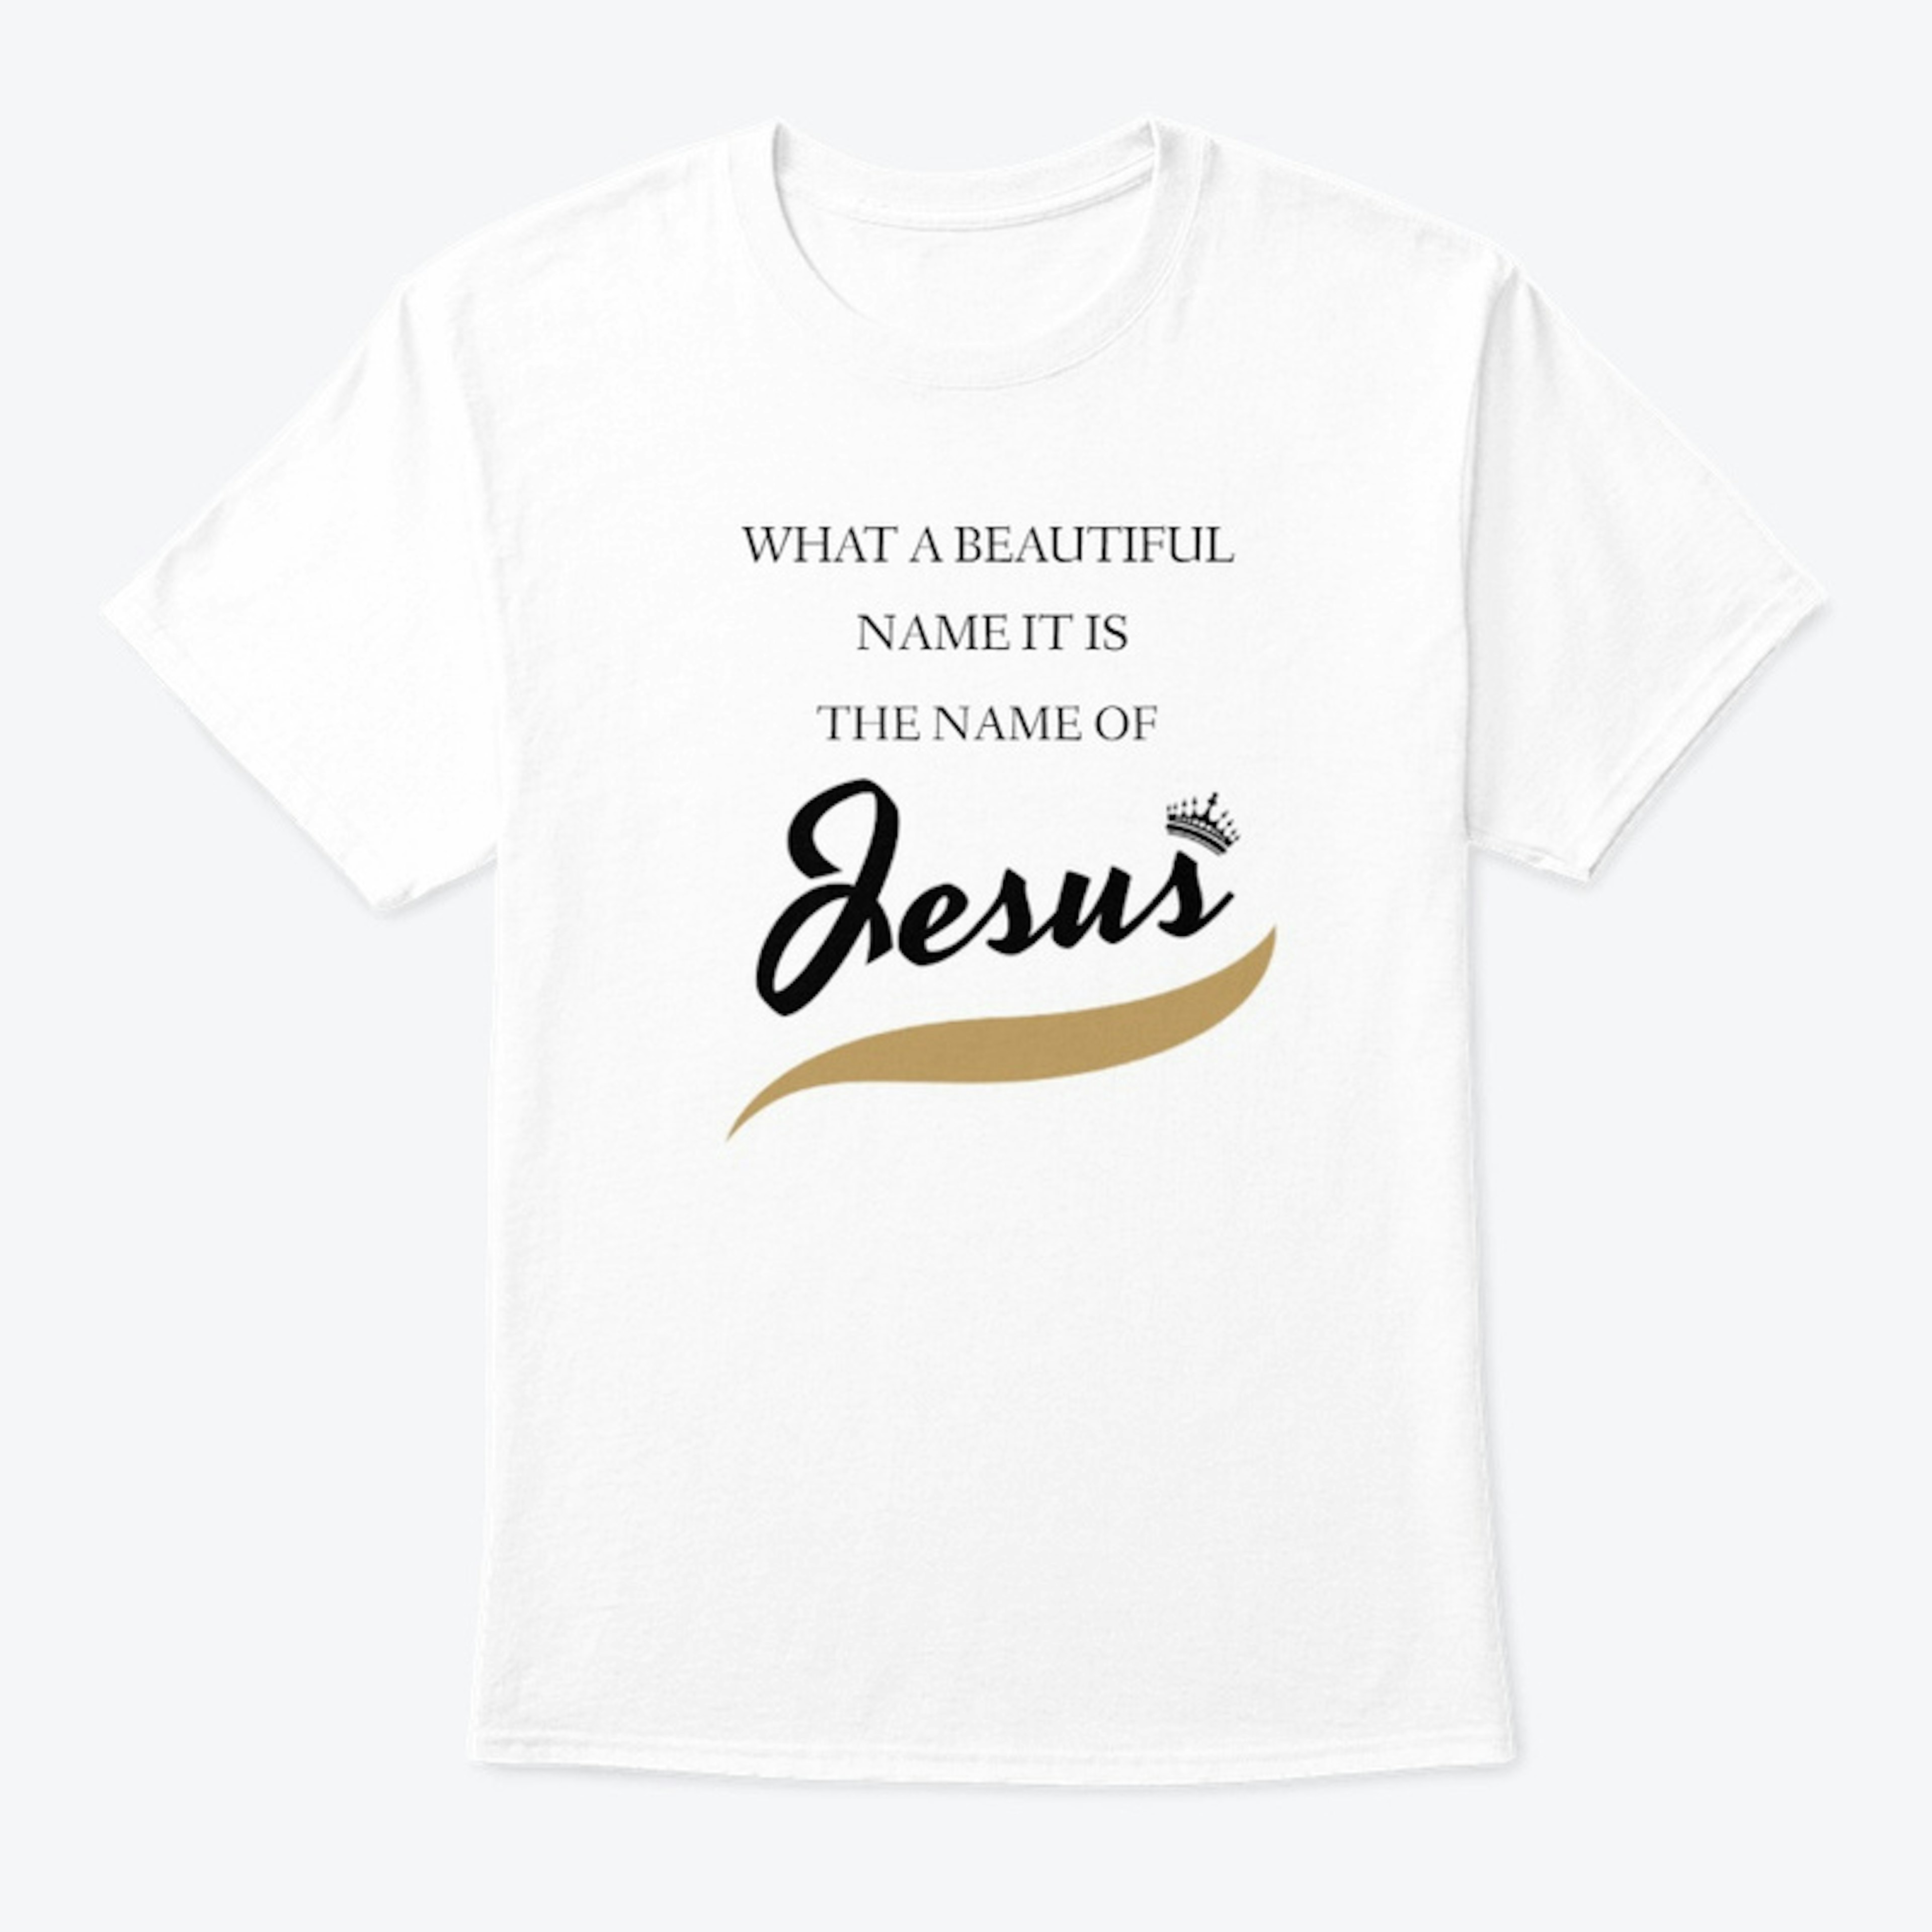 Jesus is king T shirt Jesus Tshirt